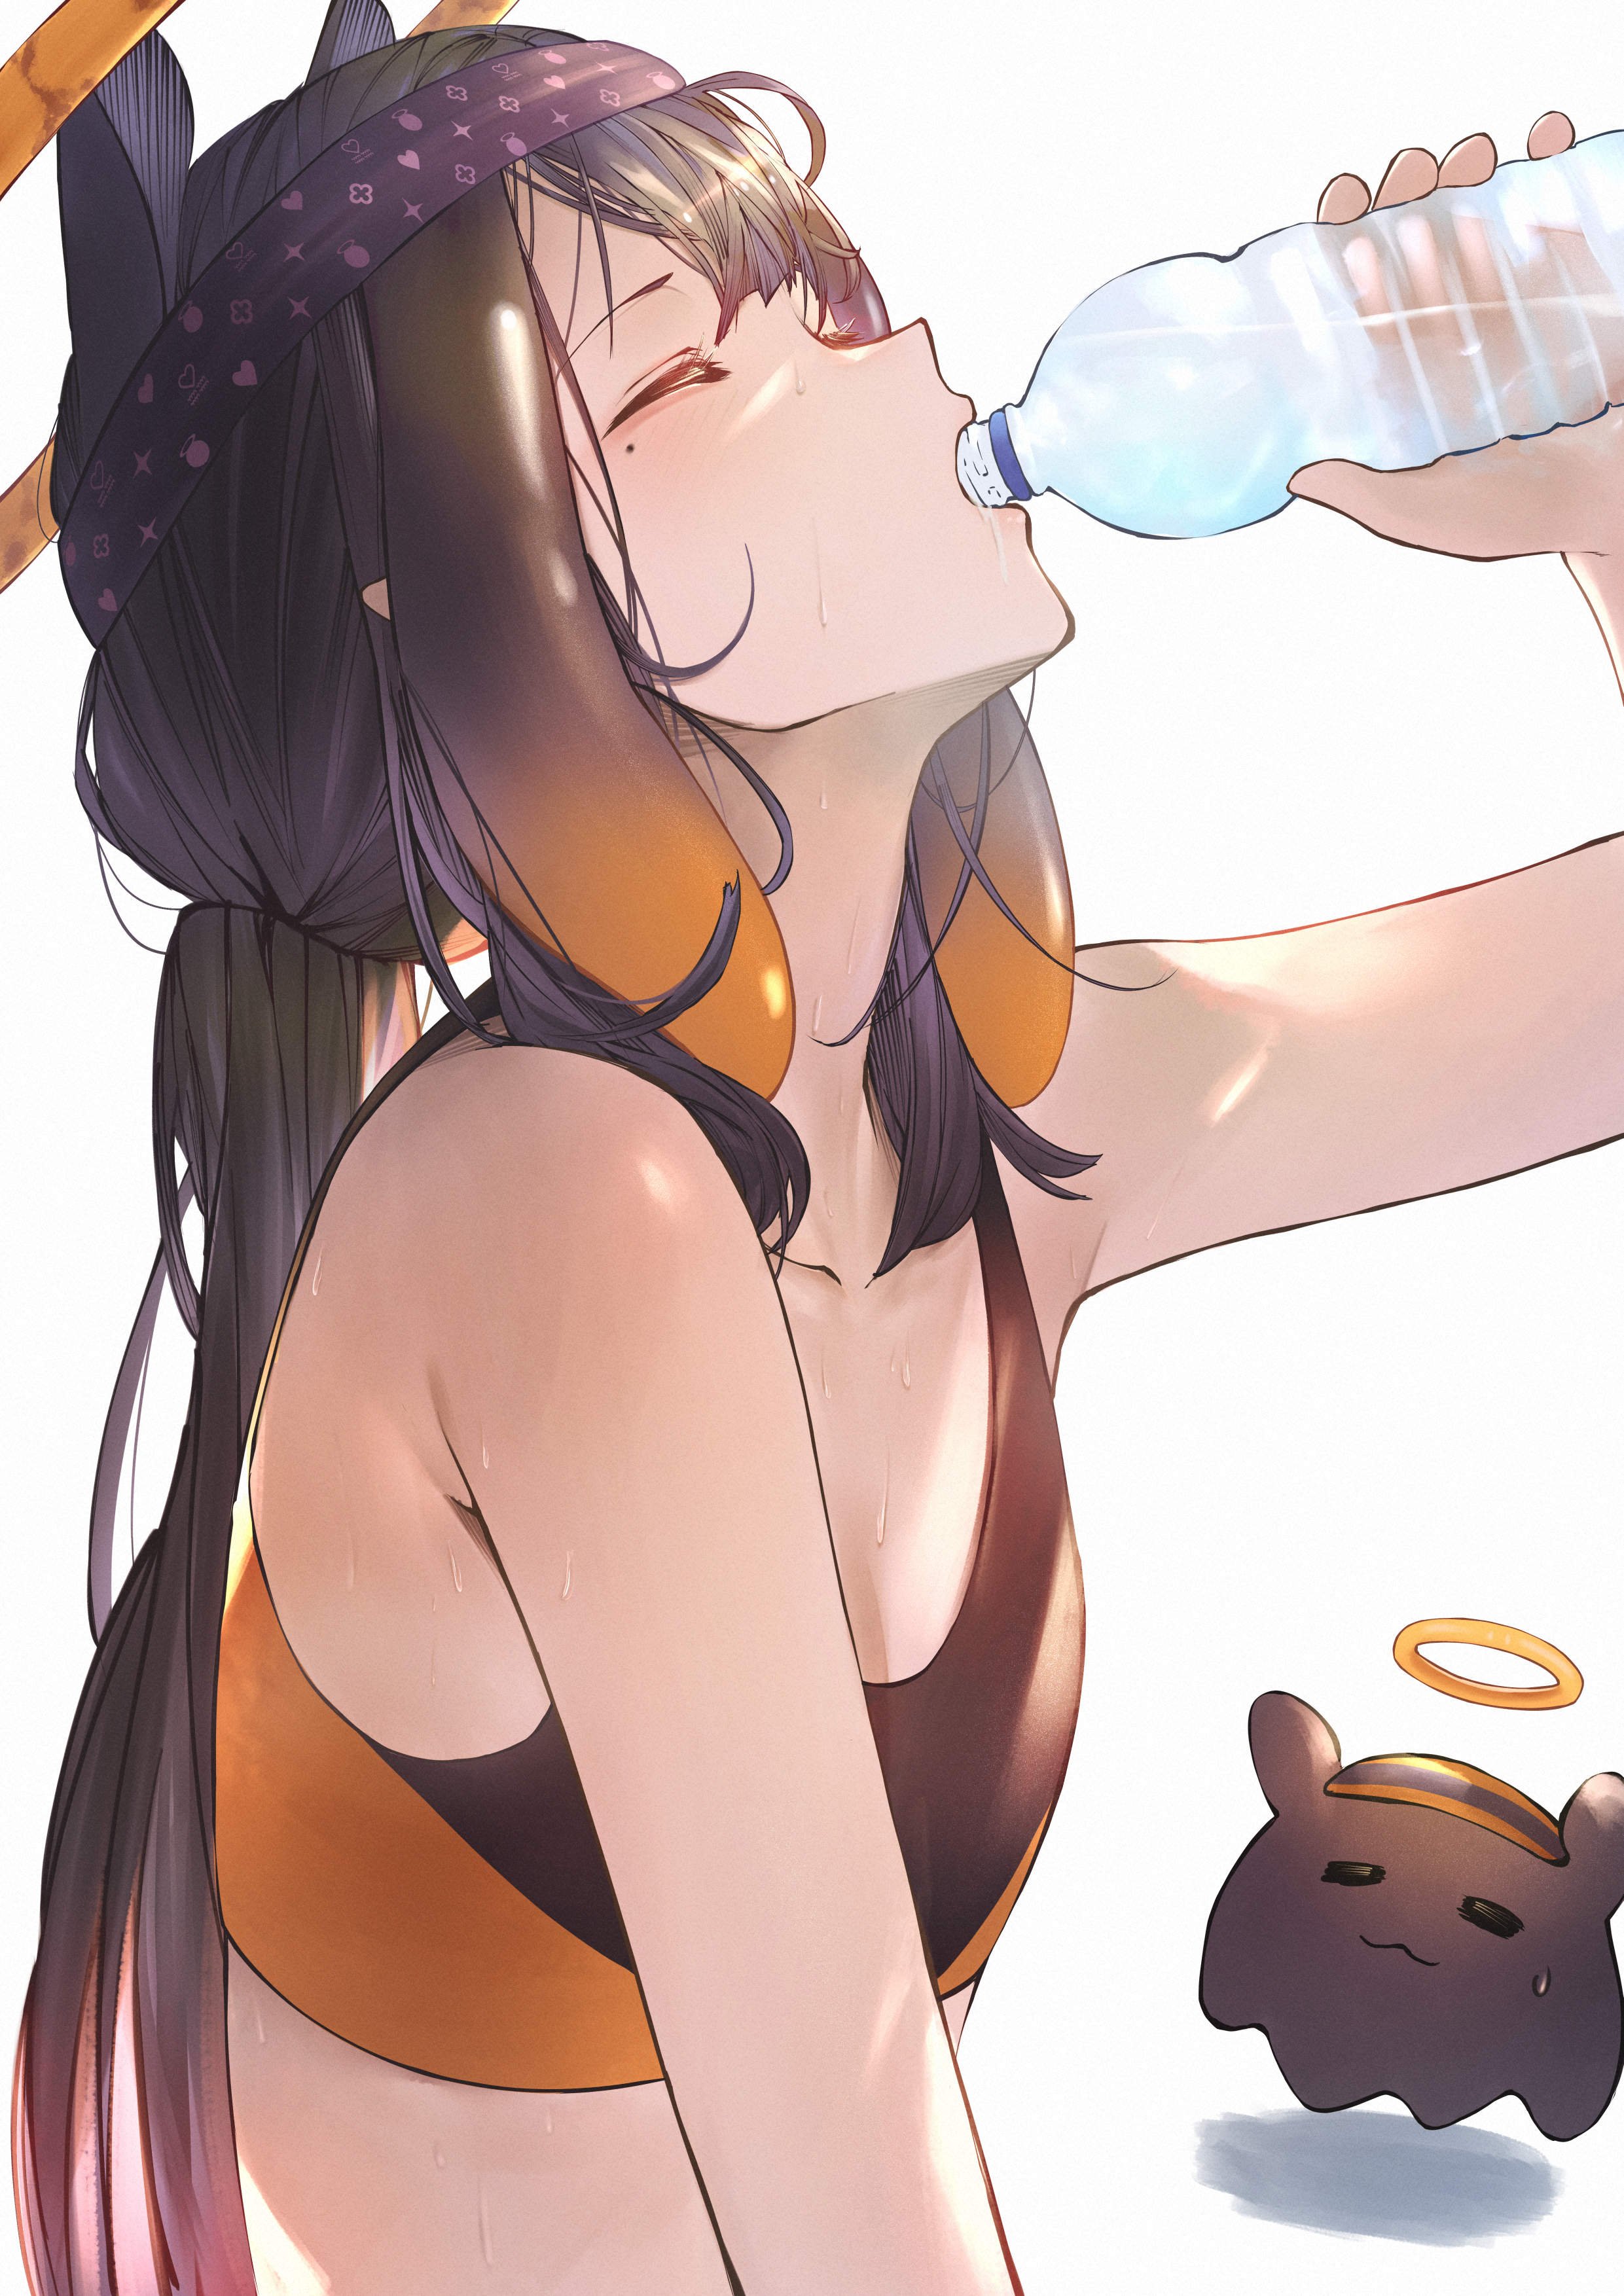 Anime 2481x3508 portrait digital art Hololive anime anime girls Ninomae Ina'nis water bottle sweat sports bra small boobs Betabeet Takodachi